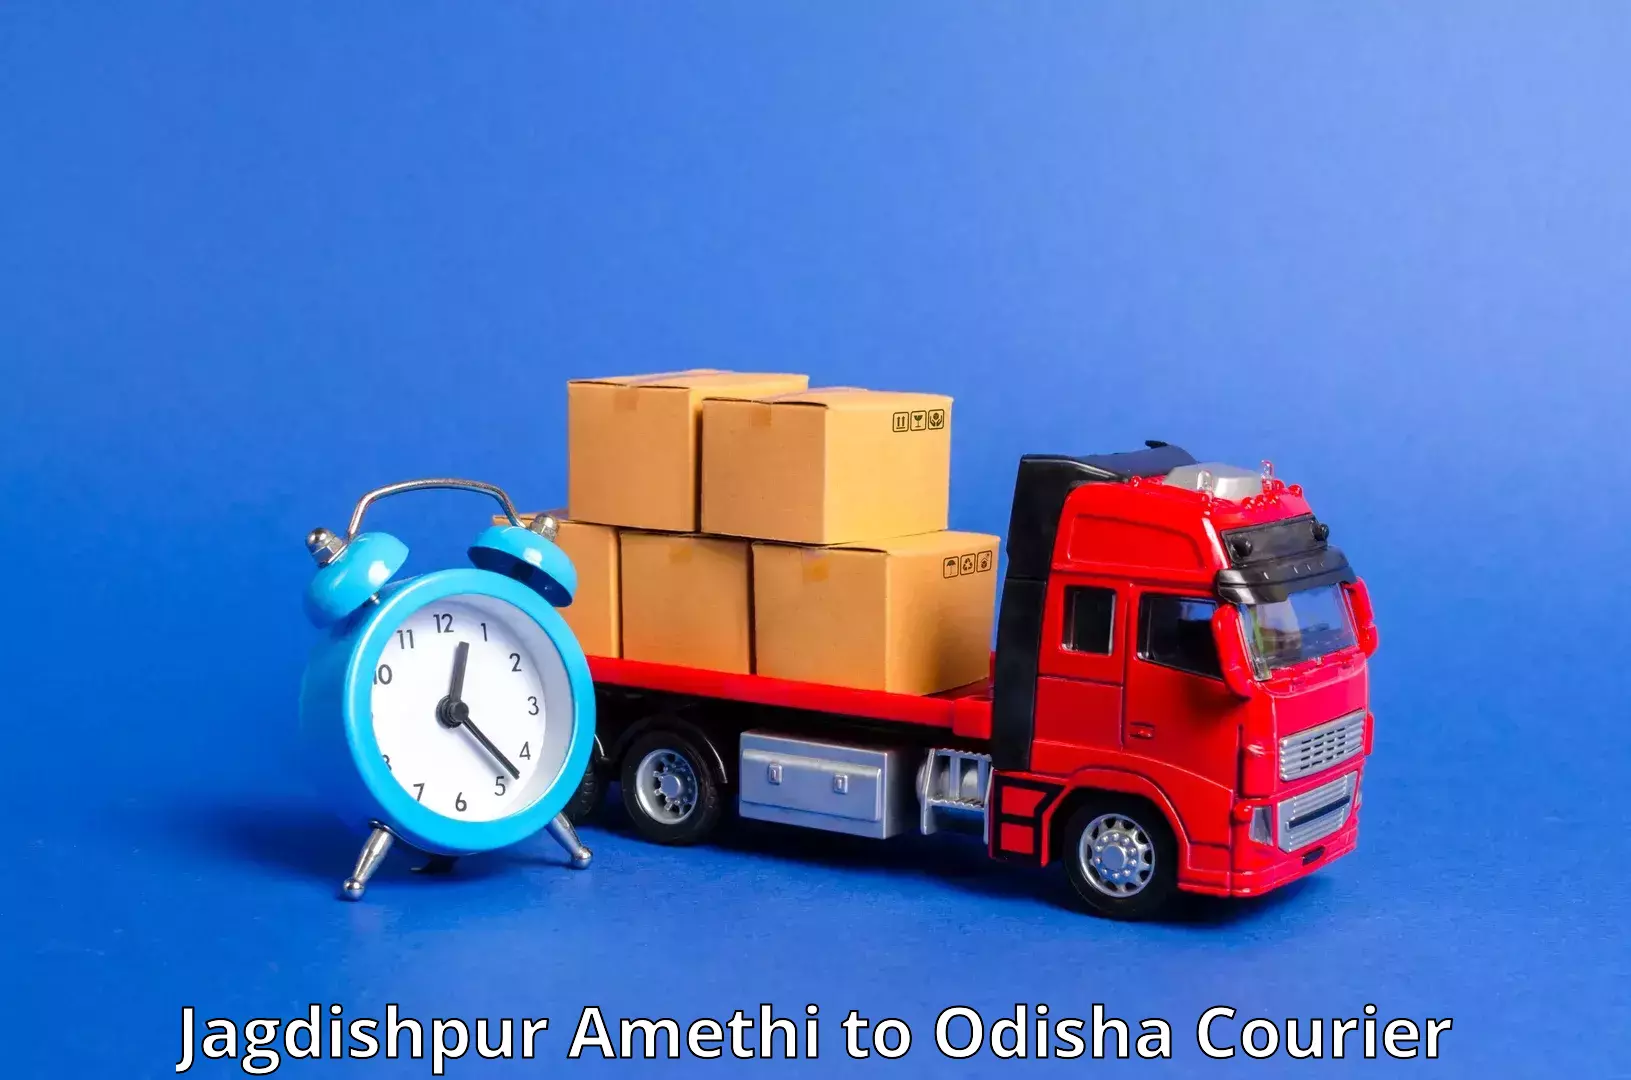 Global freight services Jagdishpur Amethi to Odisha